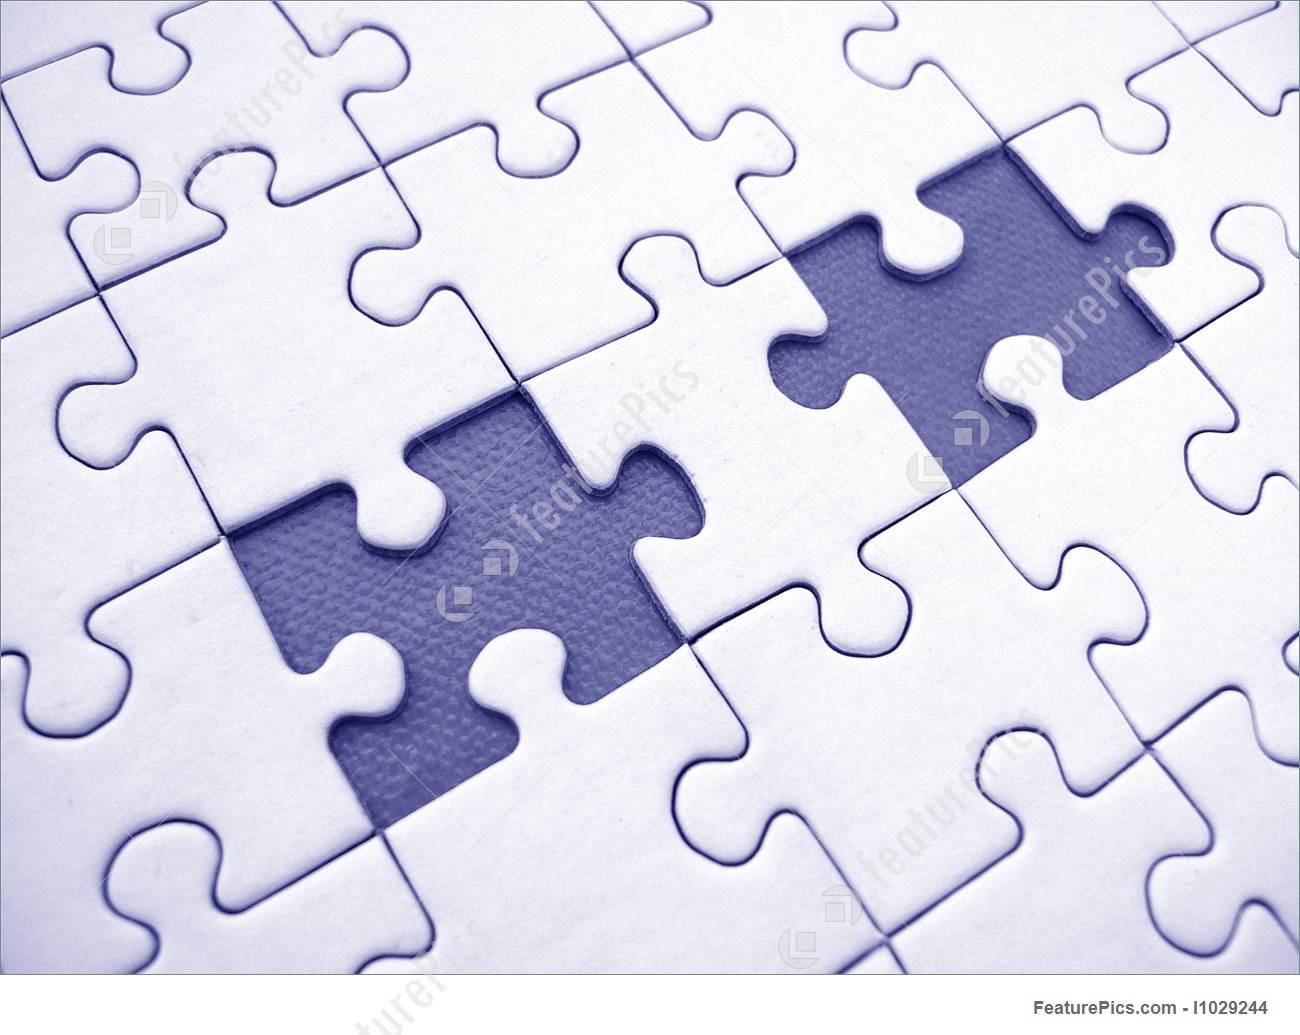 Jigsaw Background Stock Image I1029244 At Featurepics